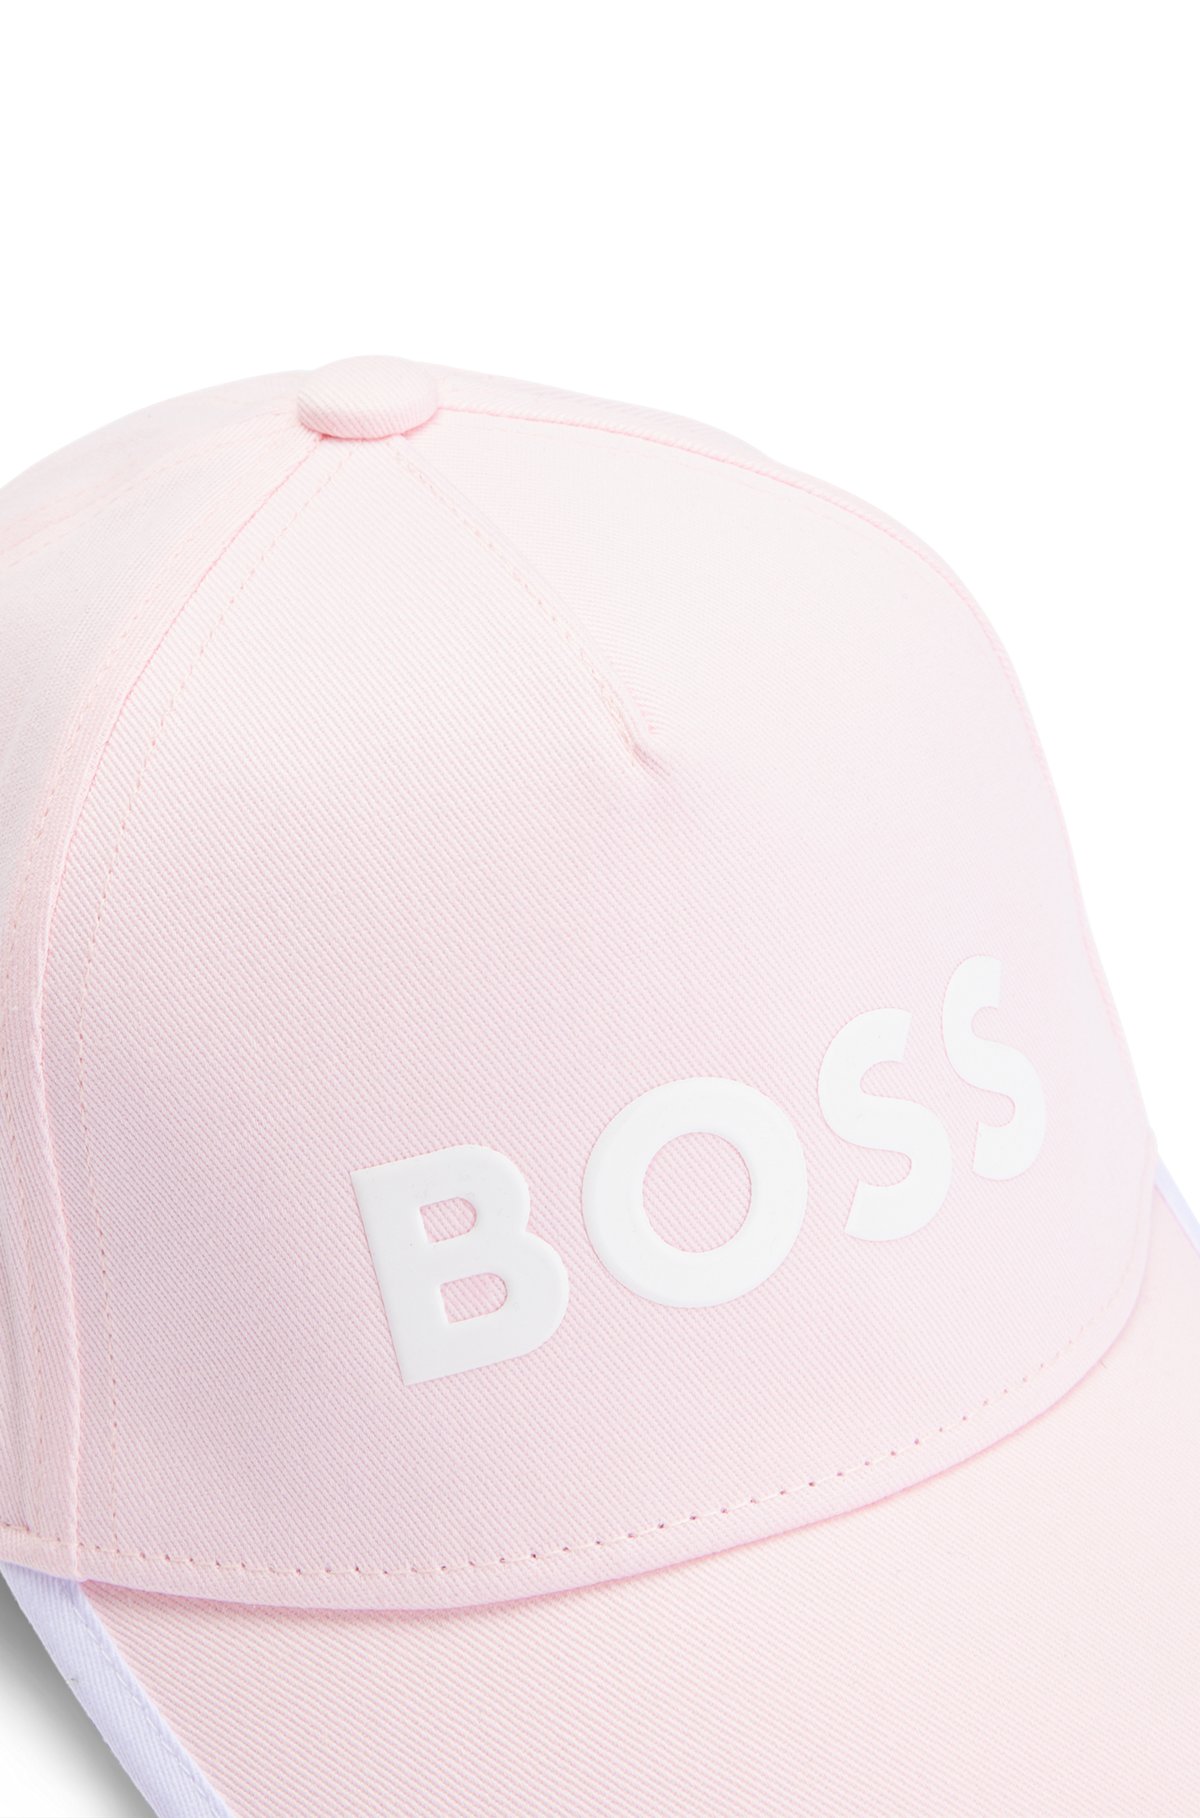 Kids' cap in cotton twill with contrast logo, Dark pink